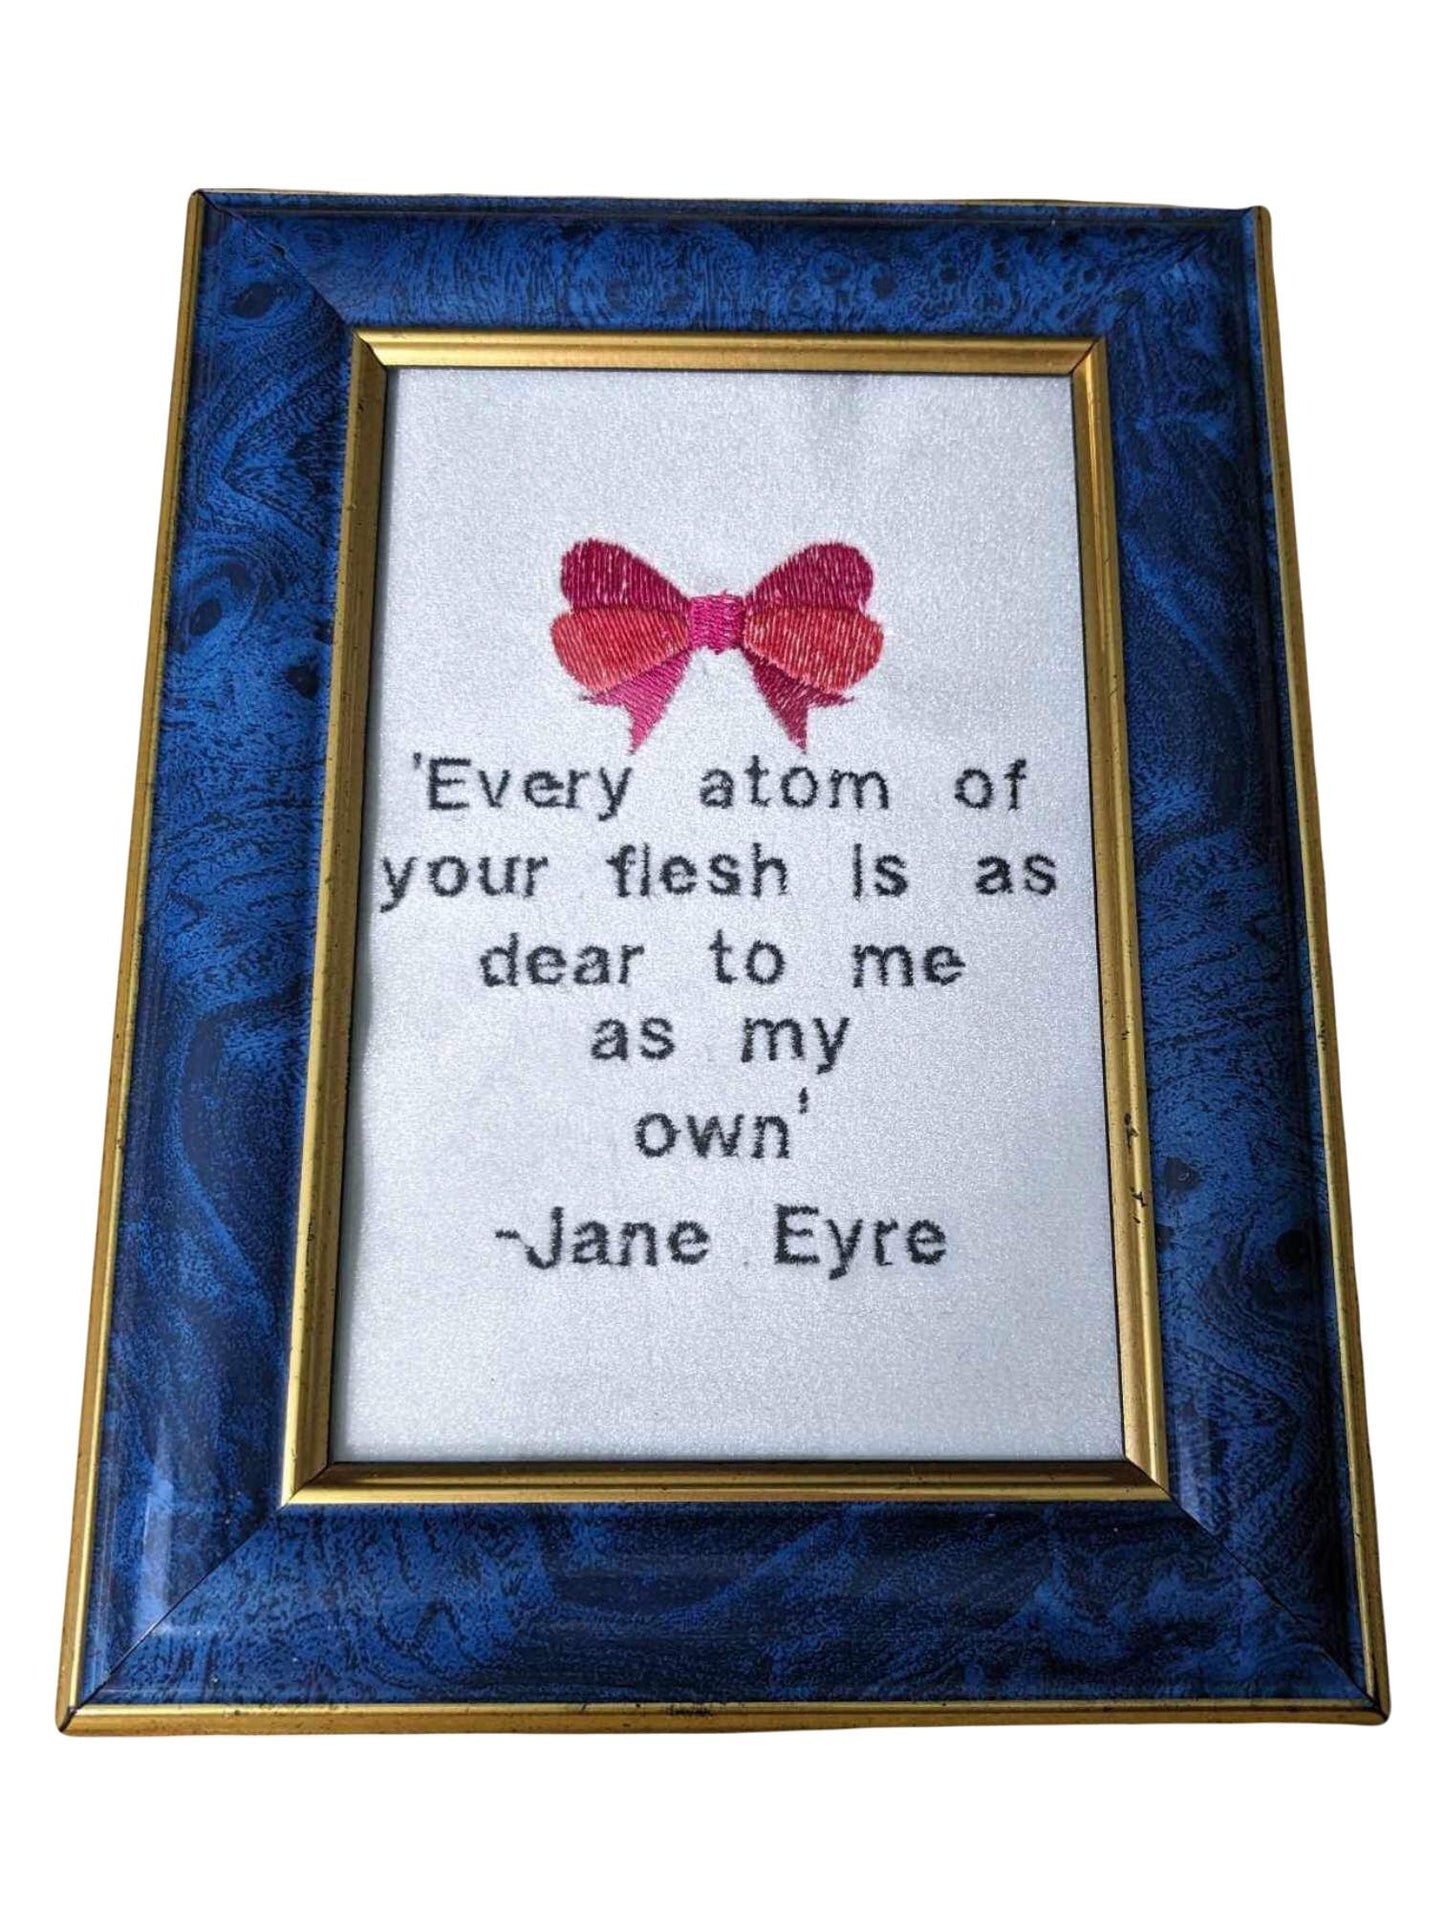 Jane Eyre - Charlotte Brontë Framed Embroidered Artwork - Perfect Valentine's Day Gift